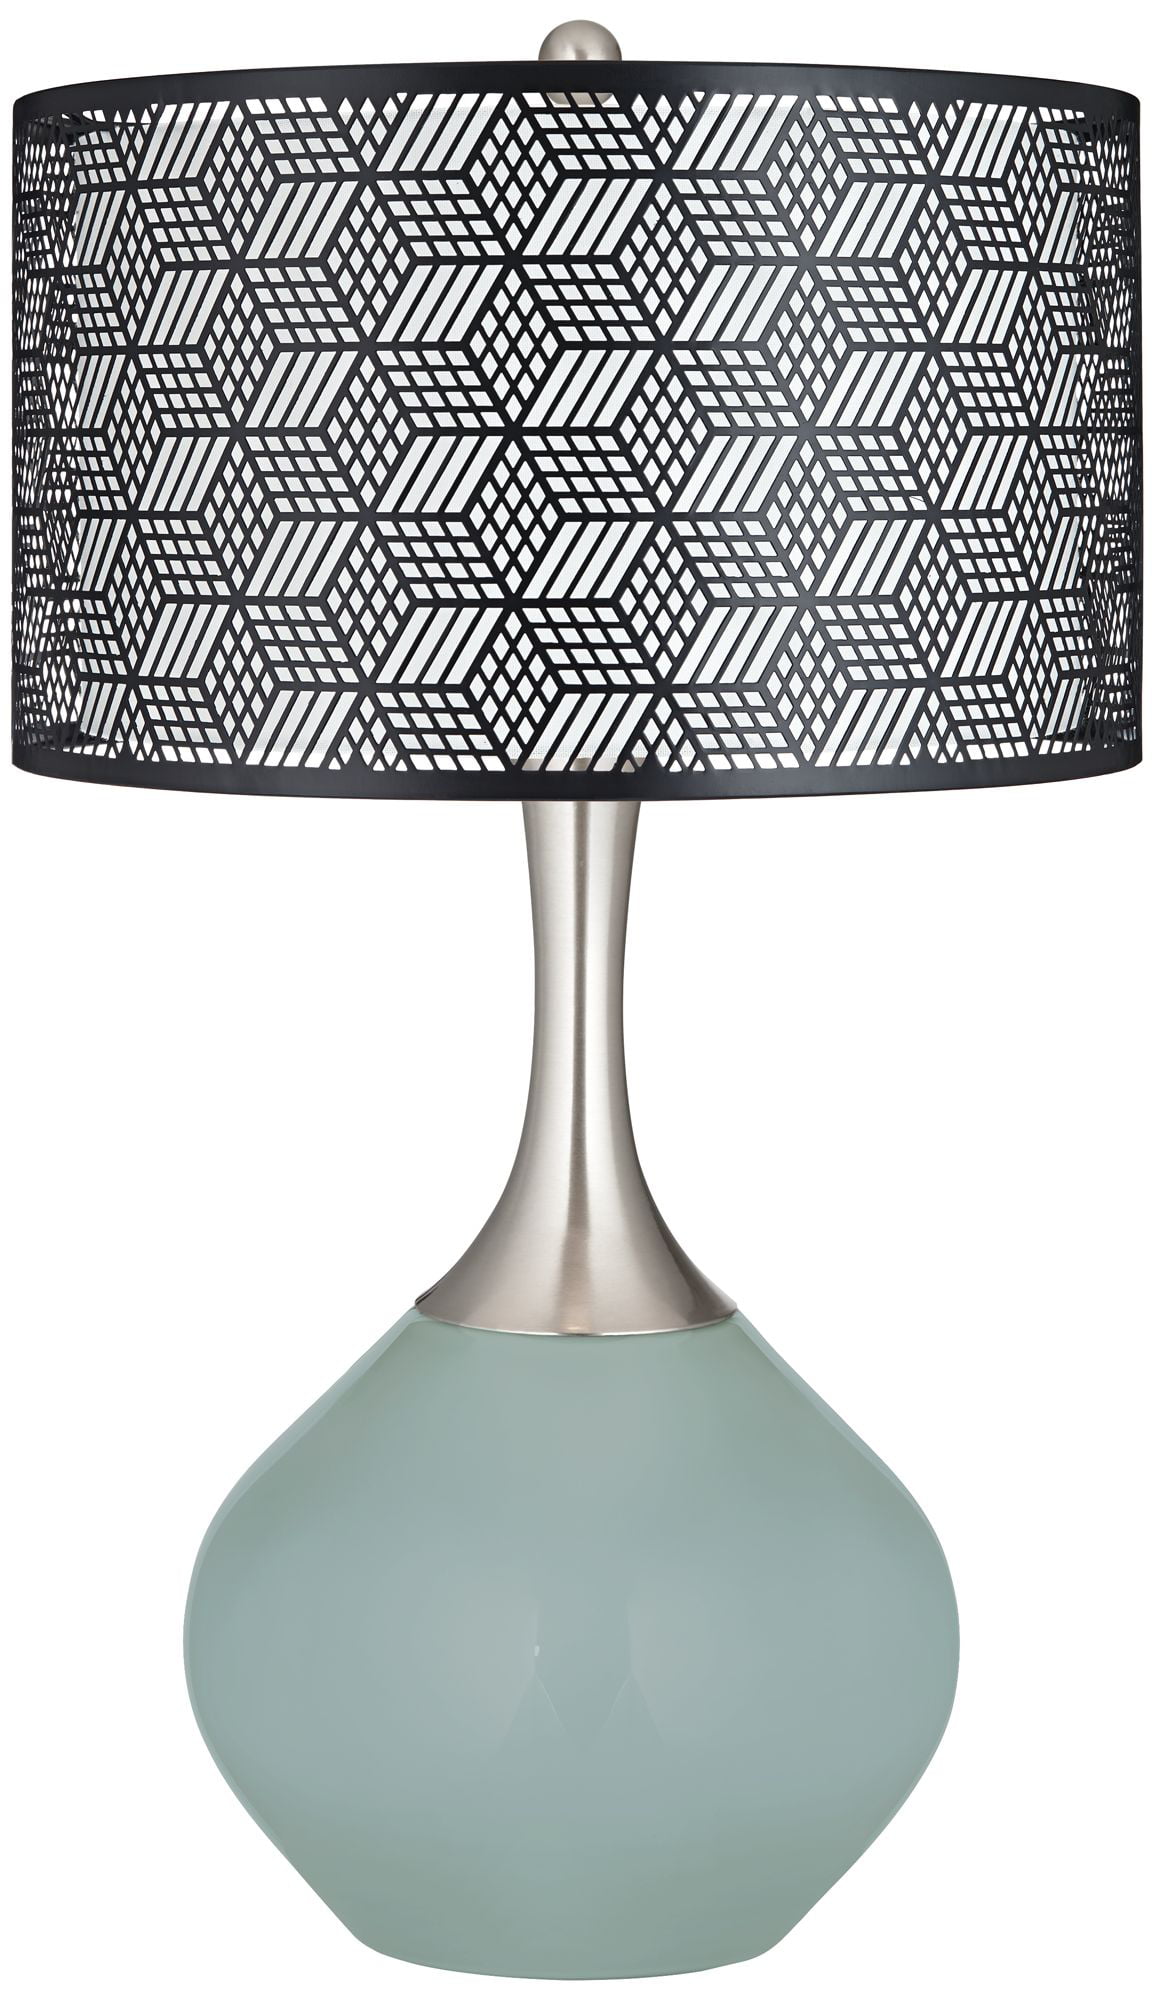 Color + Plus Aqua-Sphere Black Metal Shade Spencer Table Lamp - Walmart.com